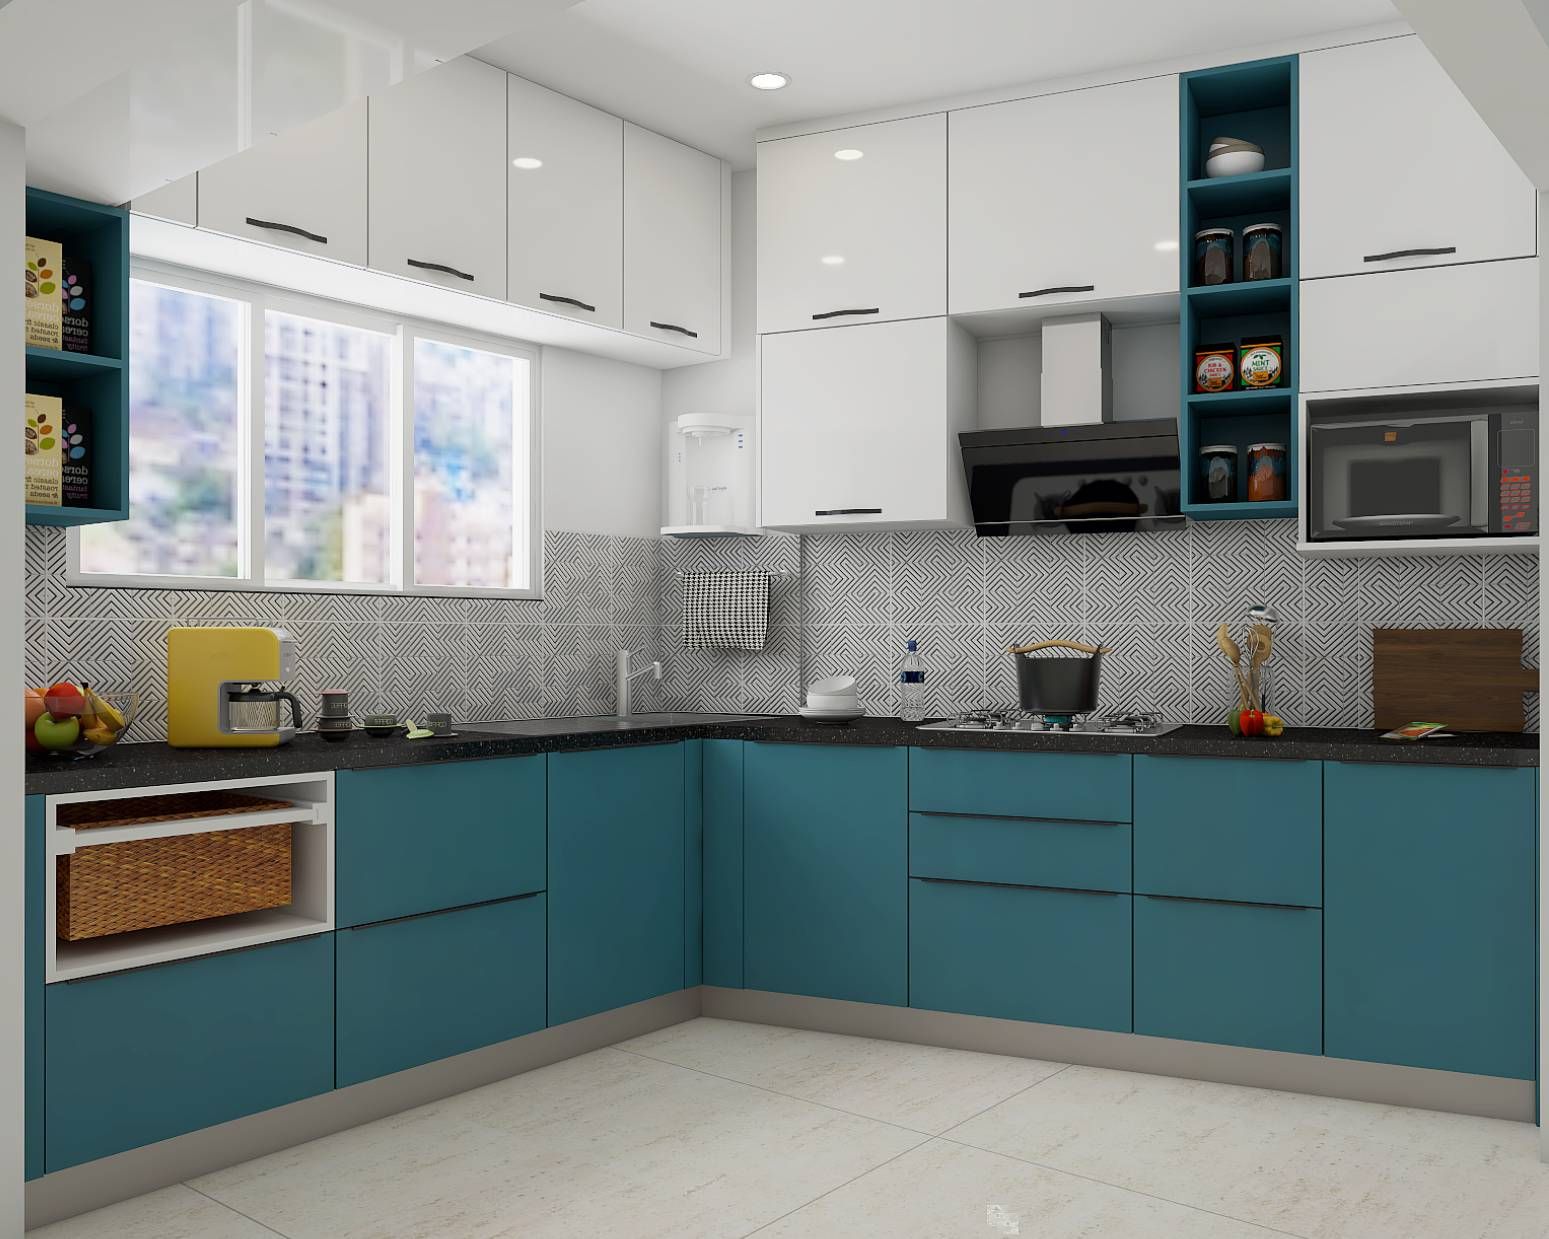 Low-Maintenance Modern Kitchen Design With Dado Tiles